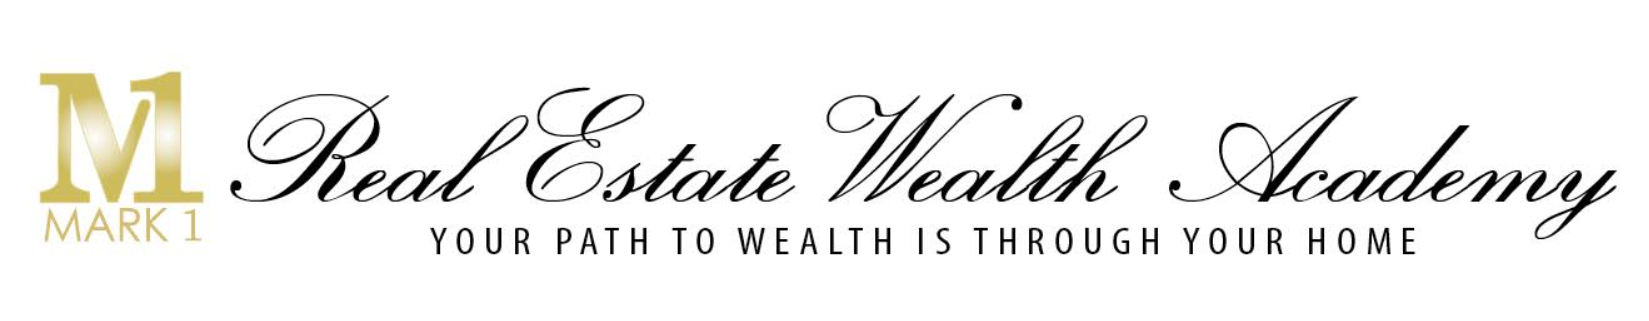 Mark1 Real Estate Wealth Academy logo